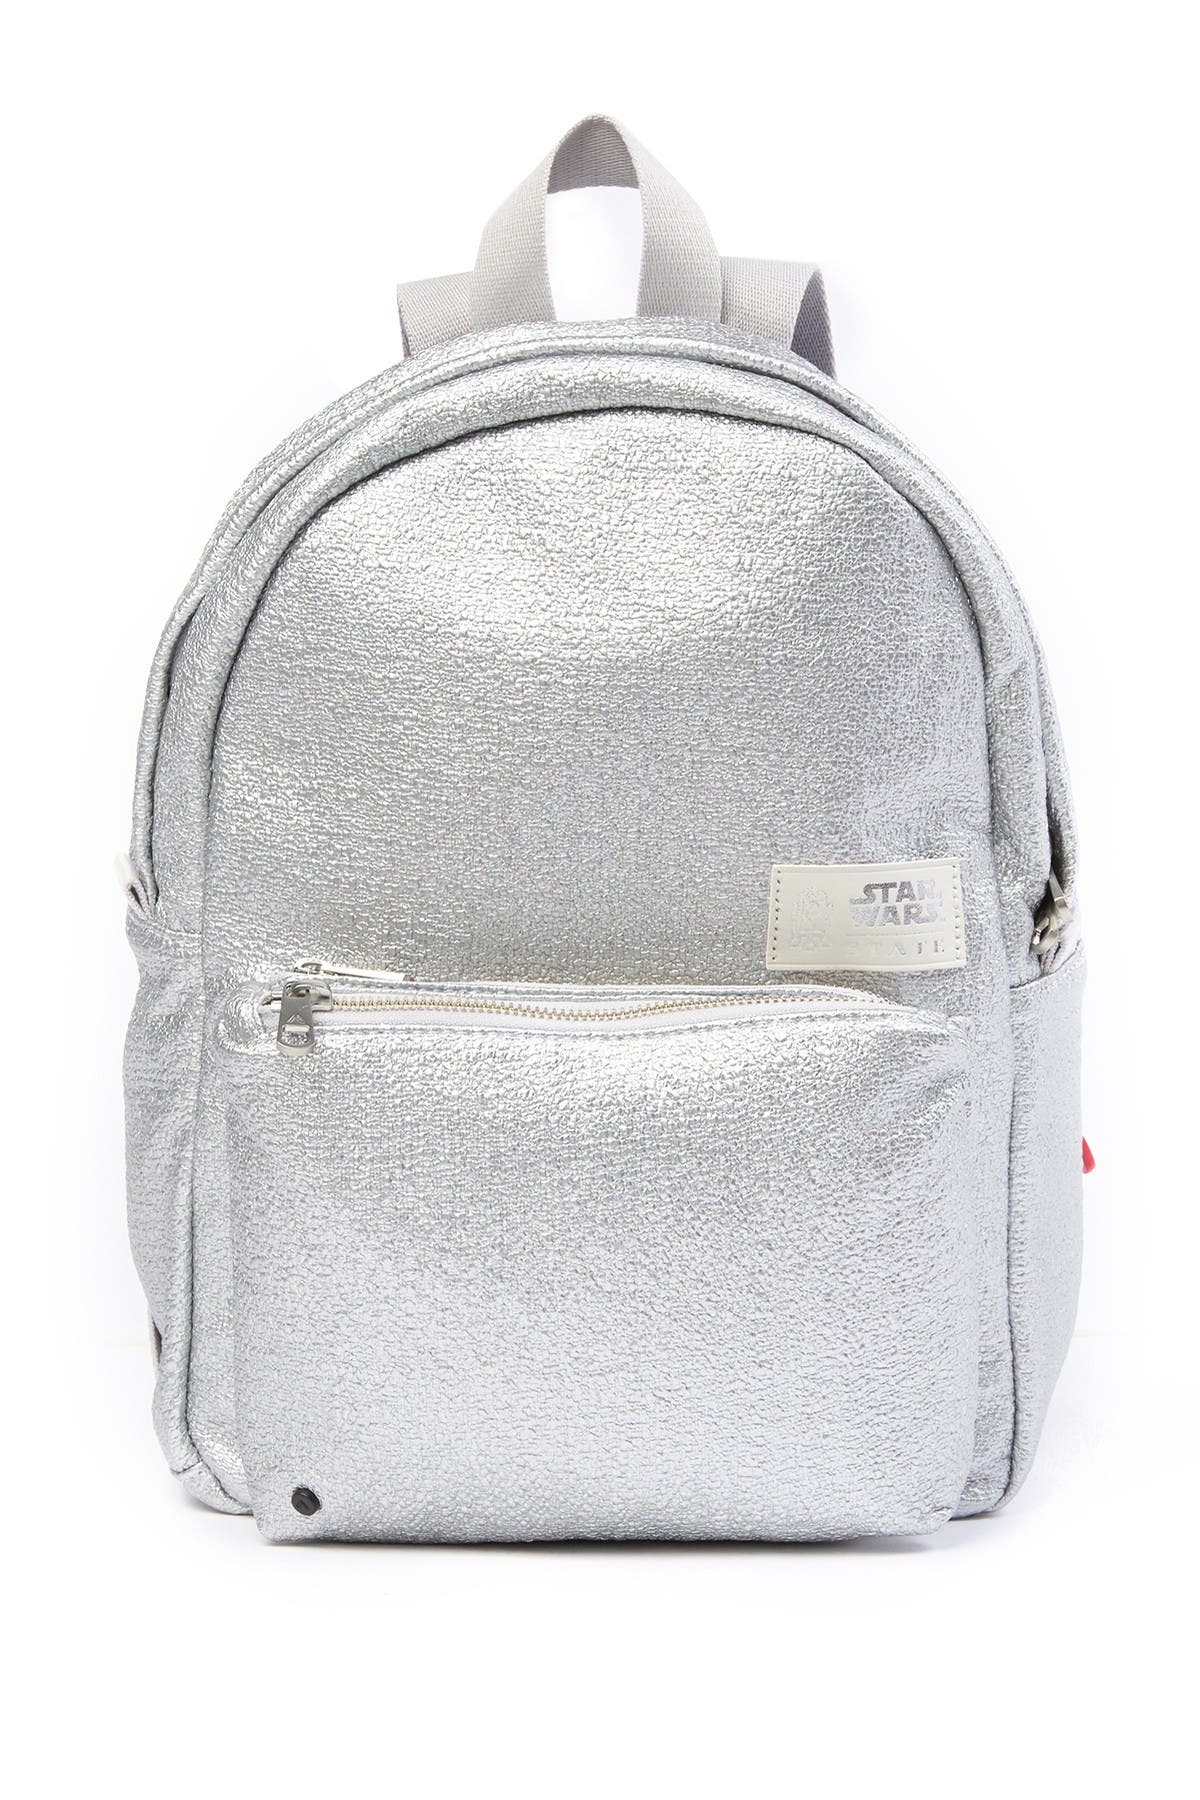 r2d2 mini backpack